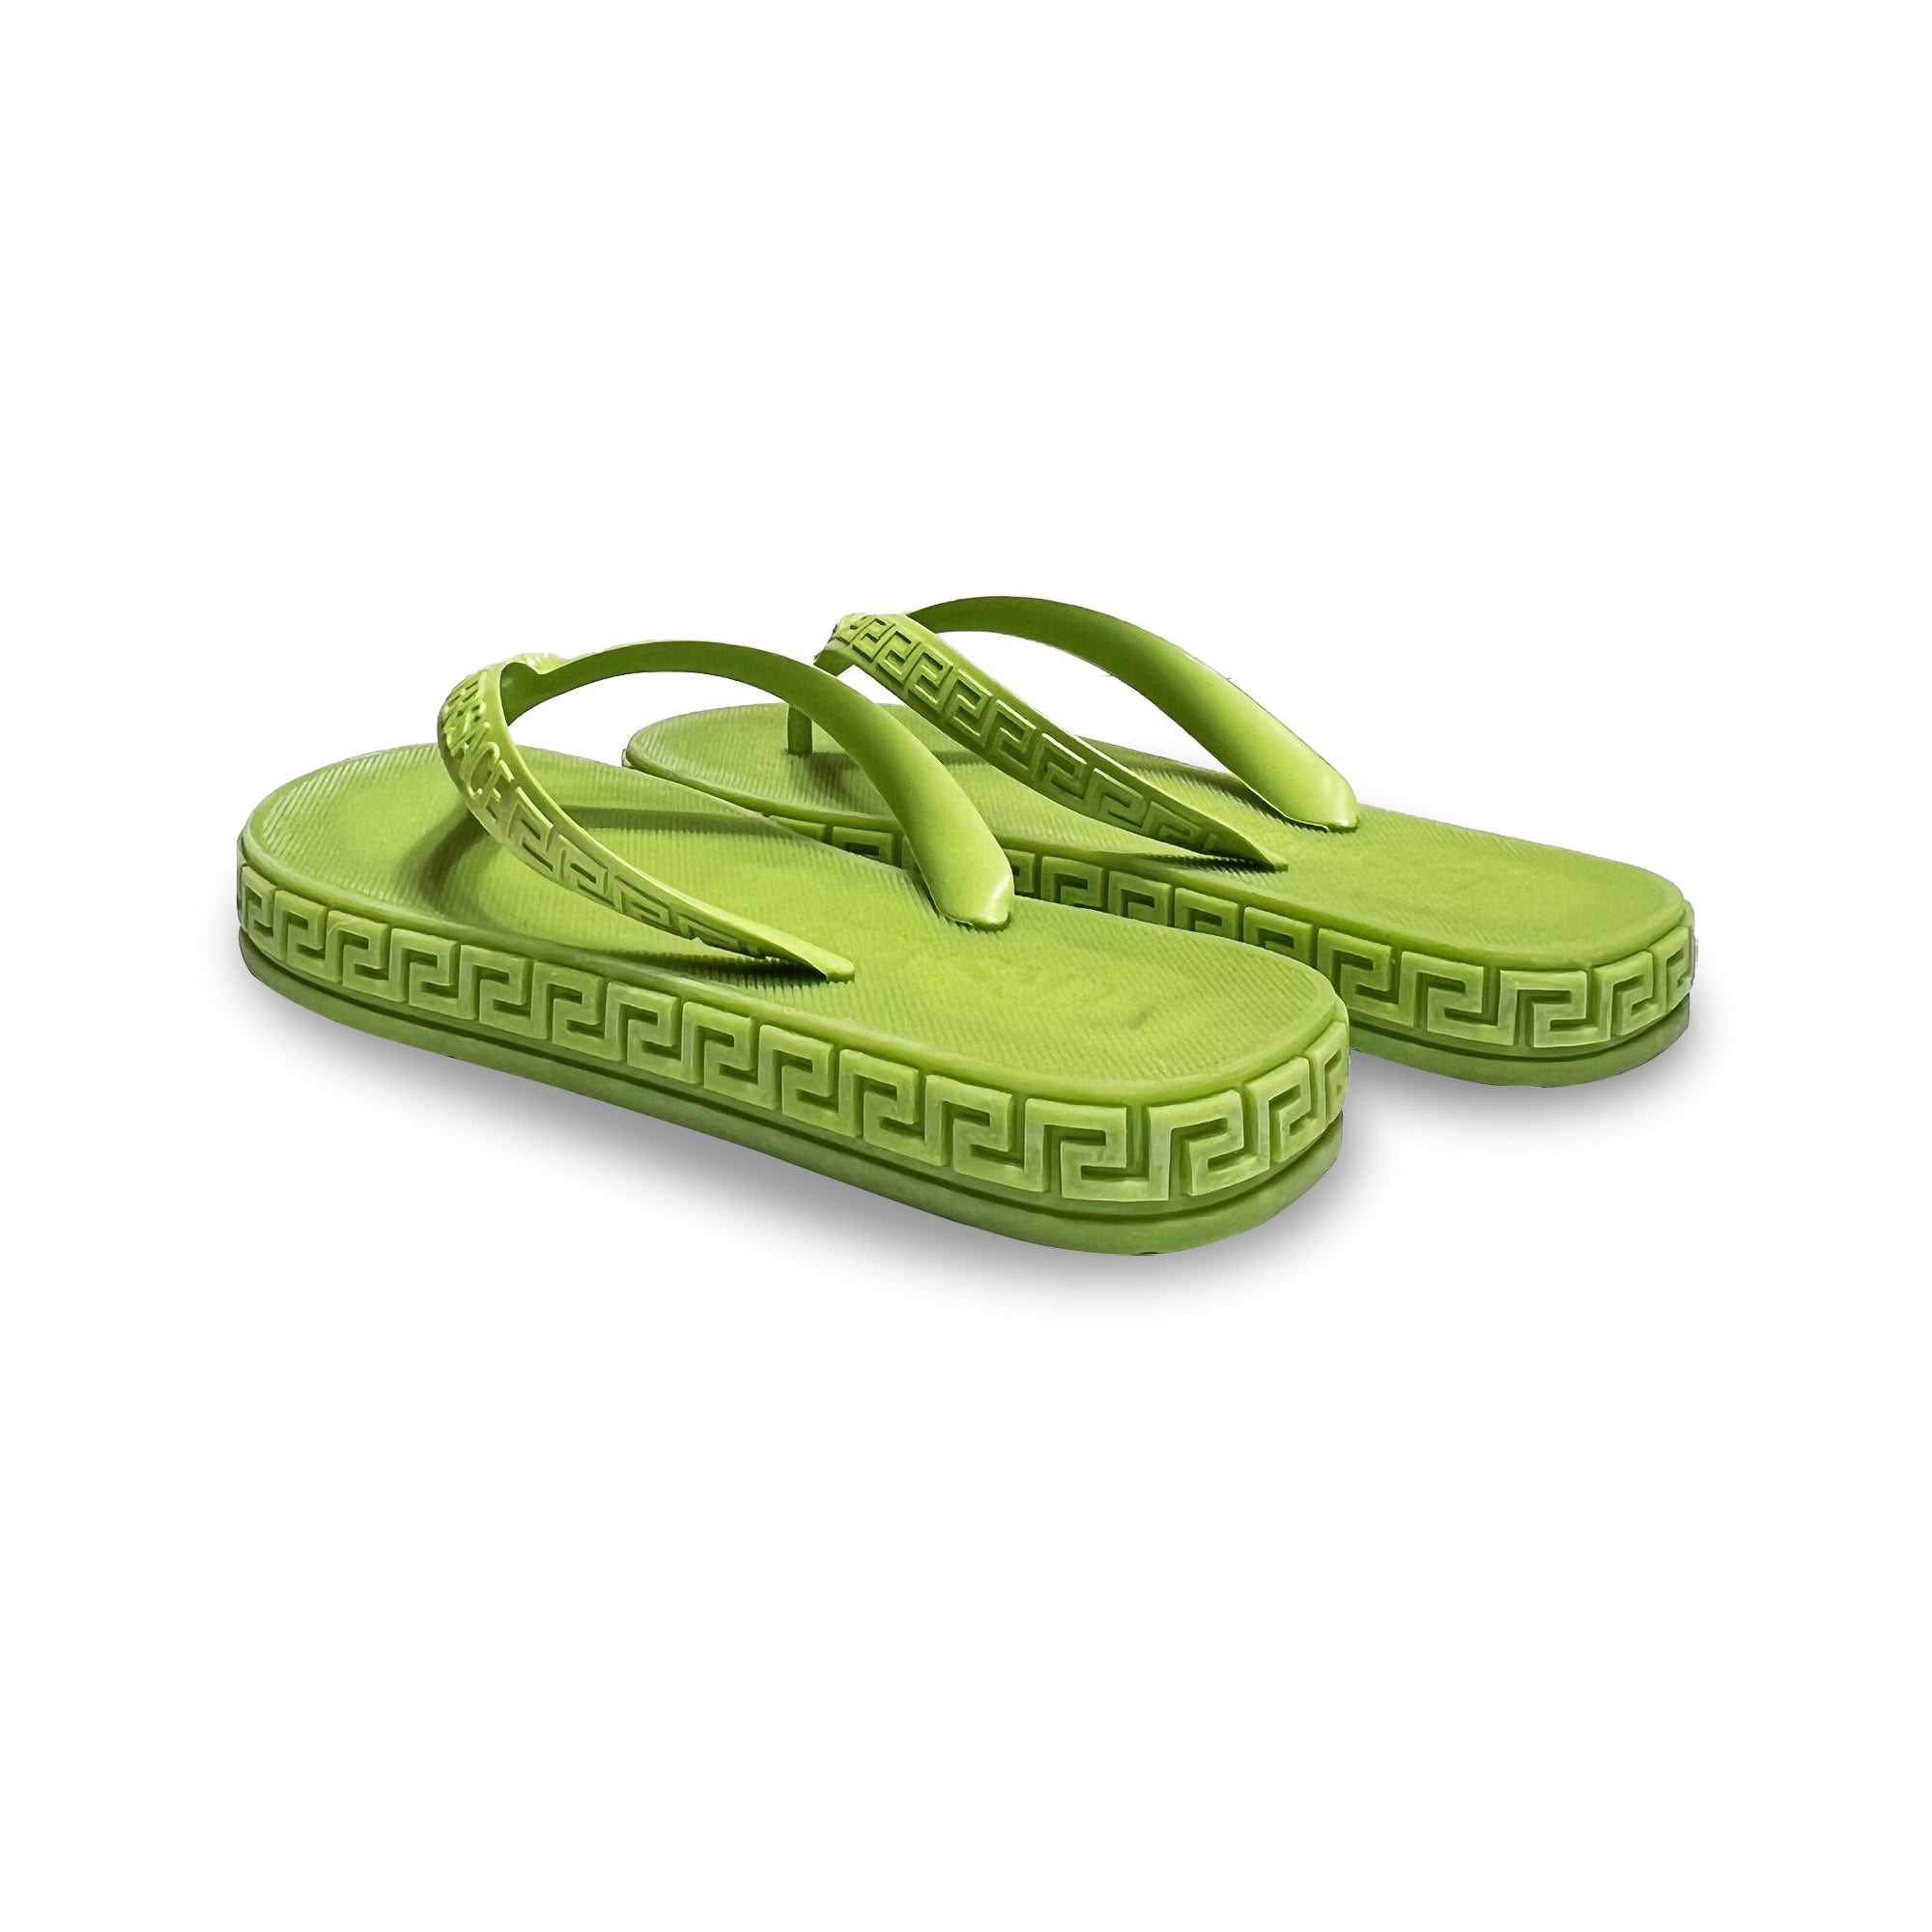 Versace Greca Logo Flip Flop Sandals